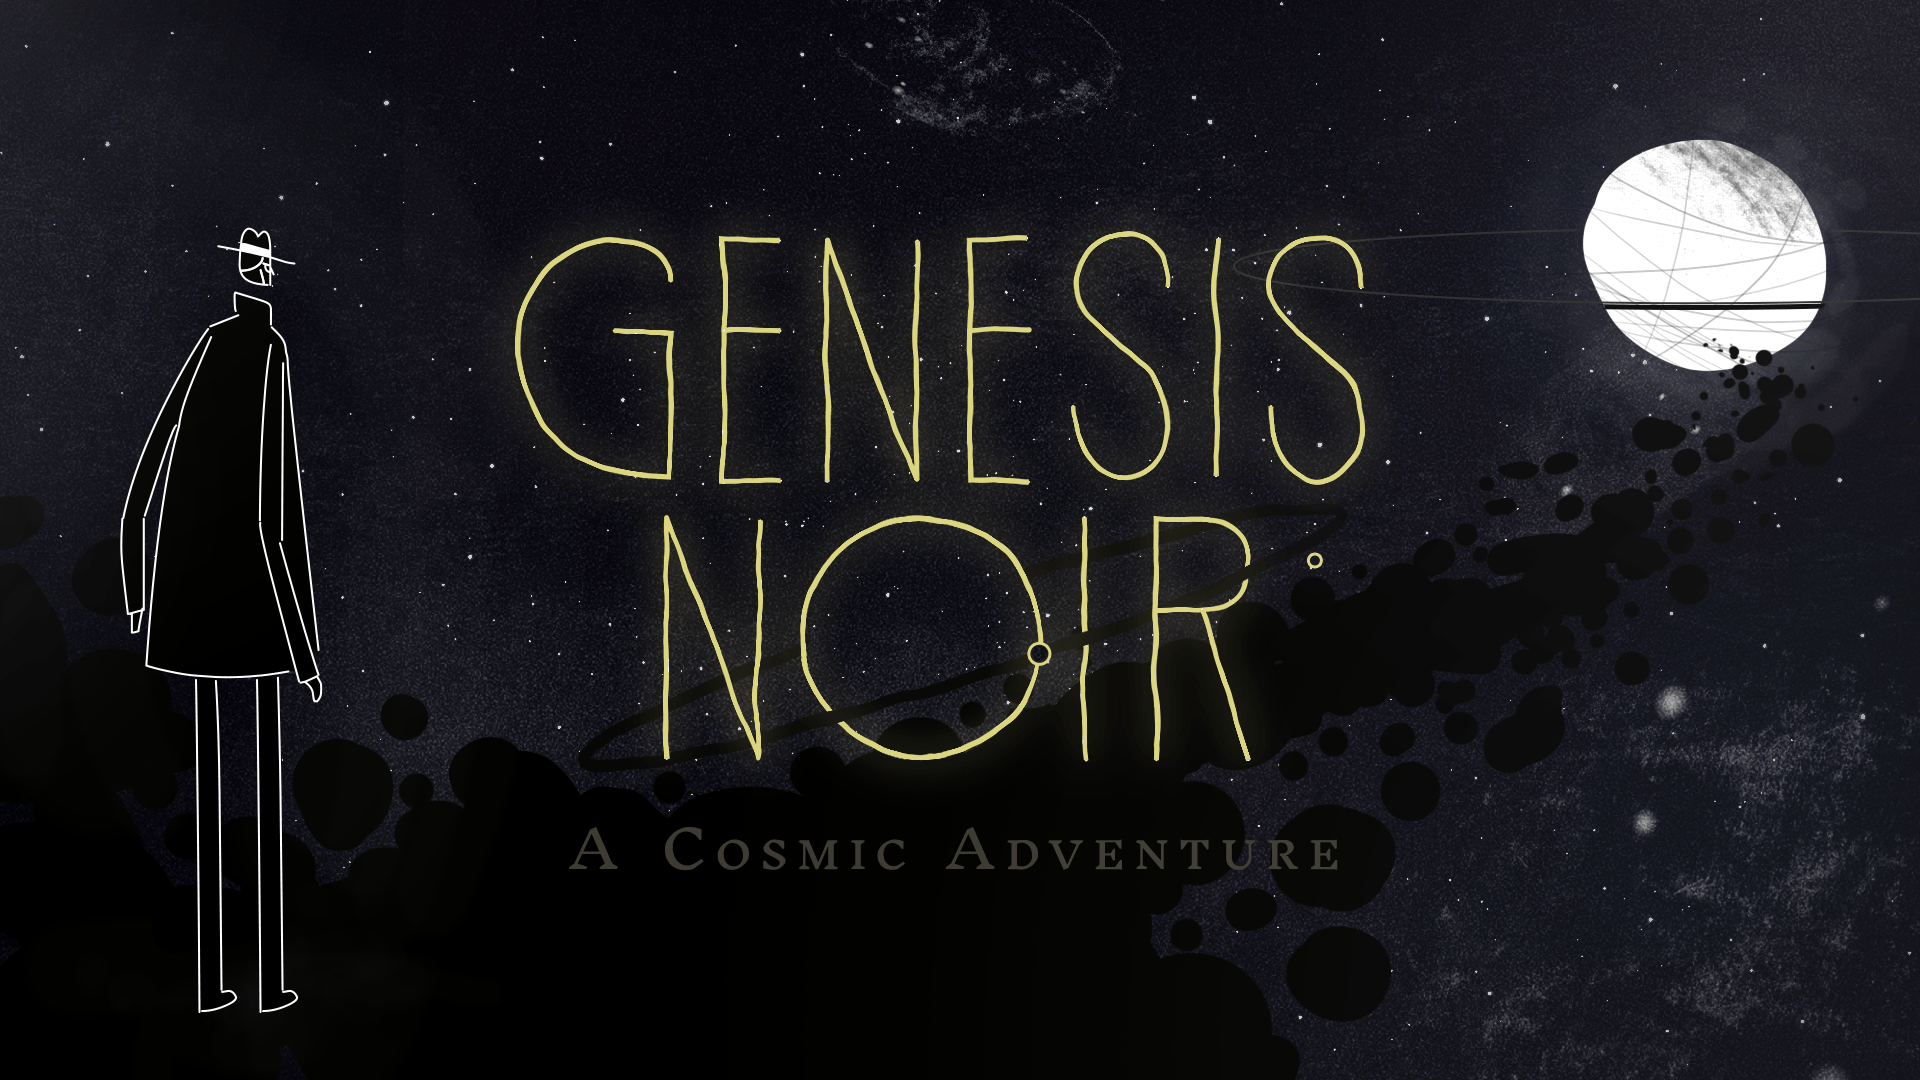 Genesis noir, chega também para xbox one | cropped header 1 | married games notícias | genesis noir